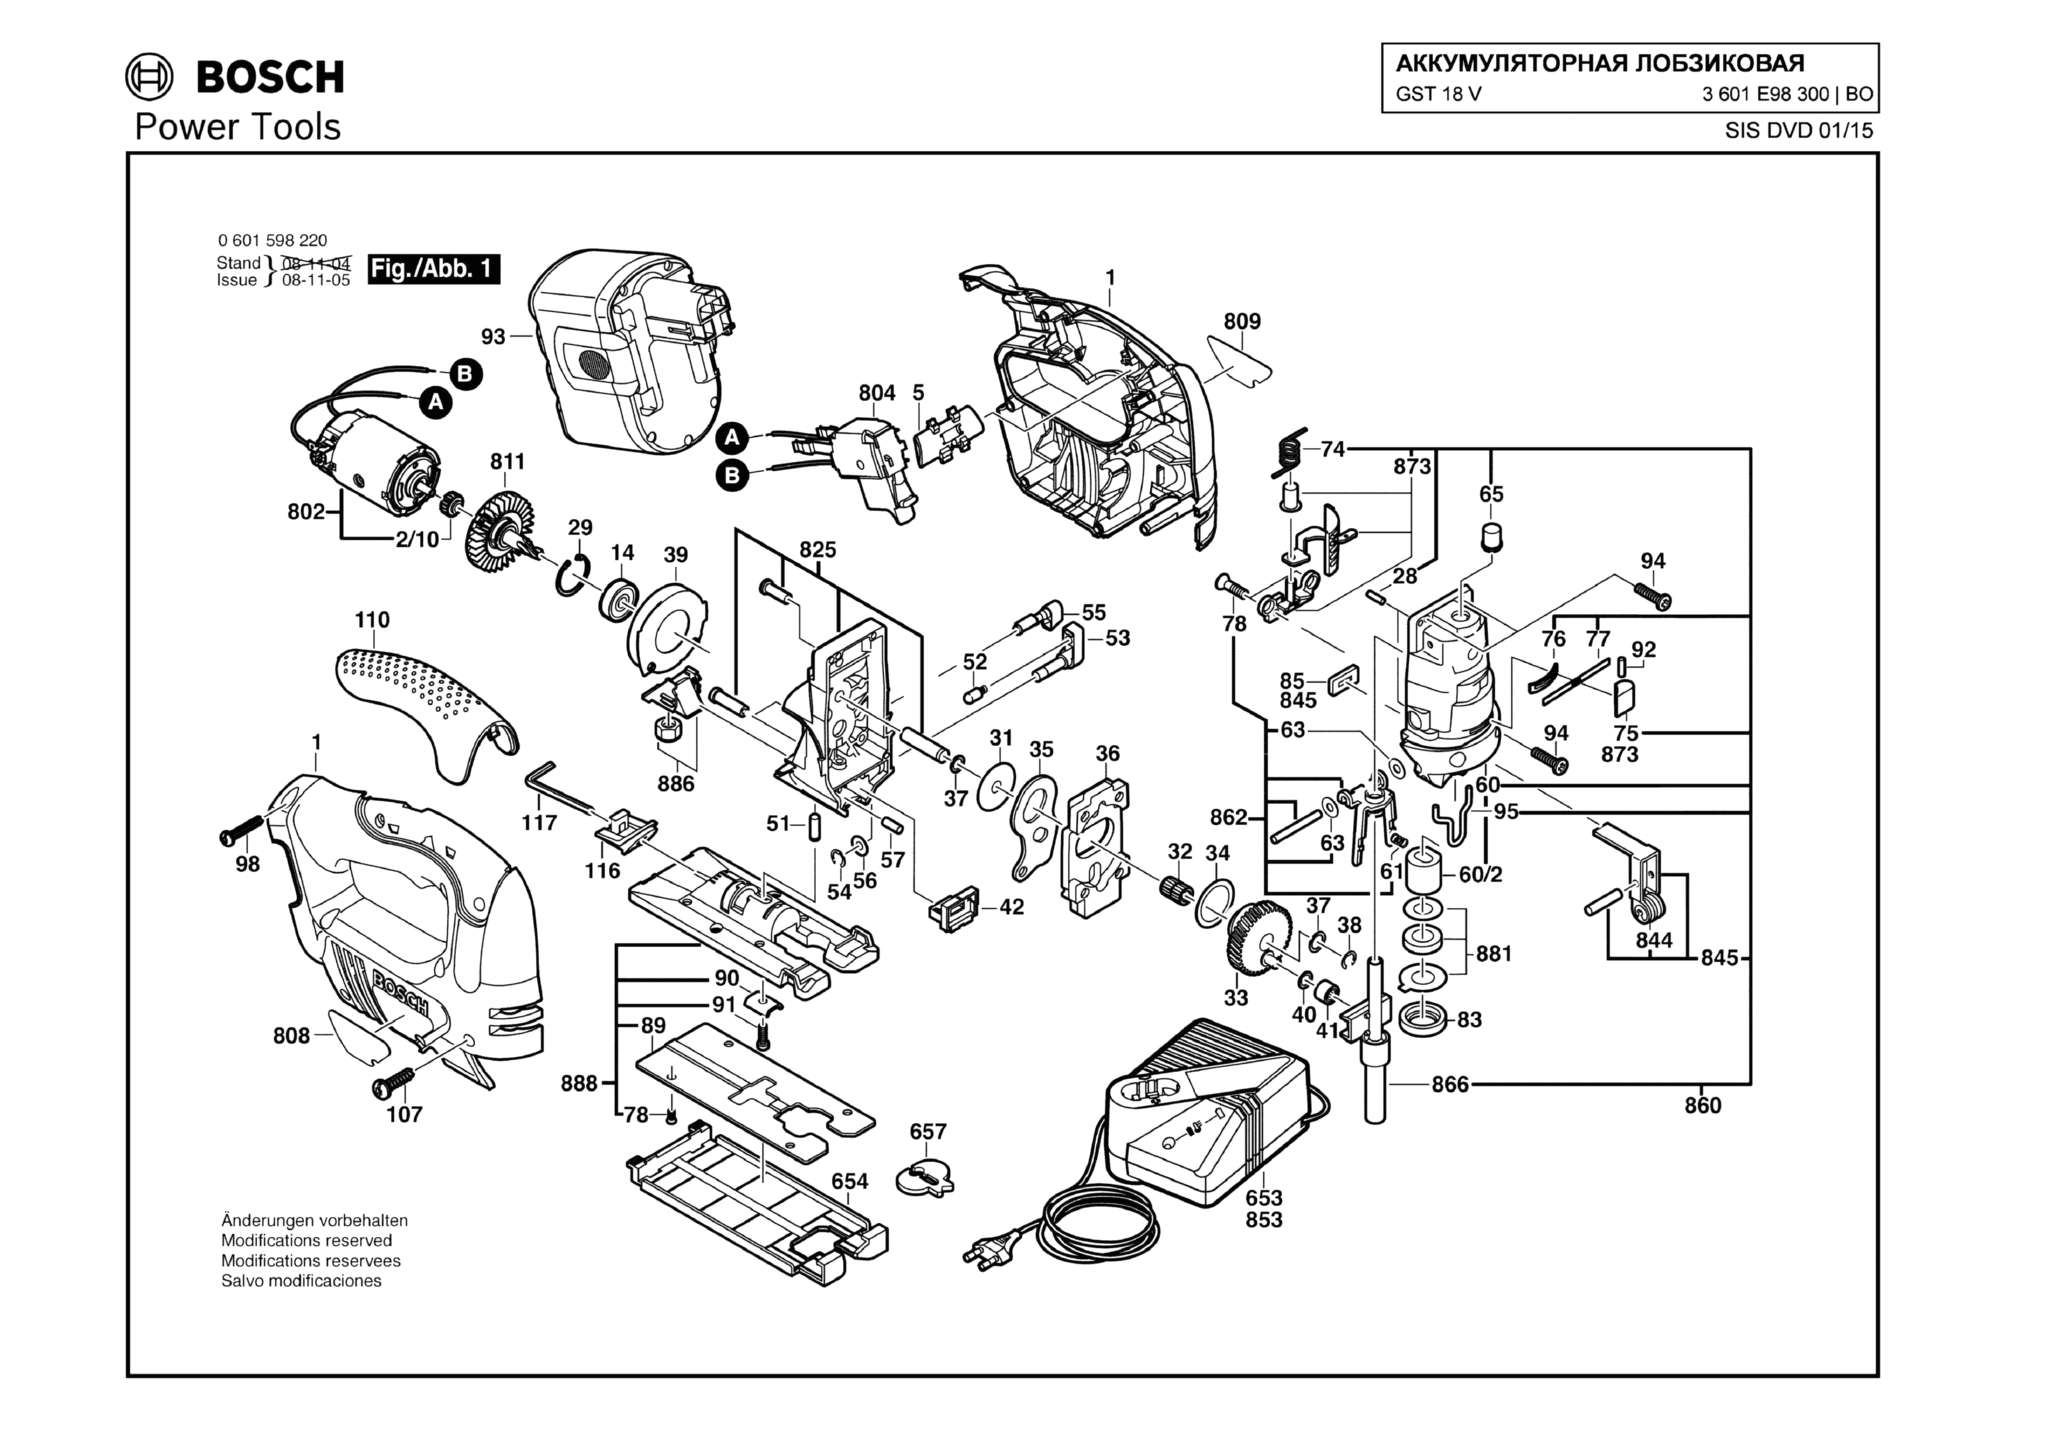 Запчасти, схема и деталировка Bosch GST 18 V (ТИП 3601E98300)